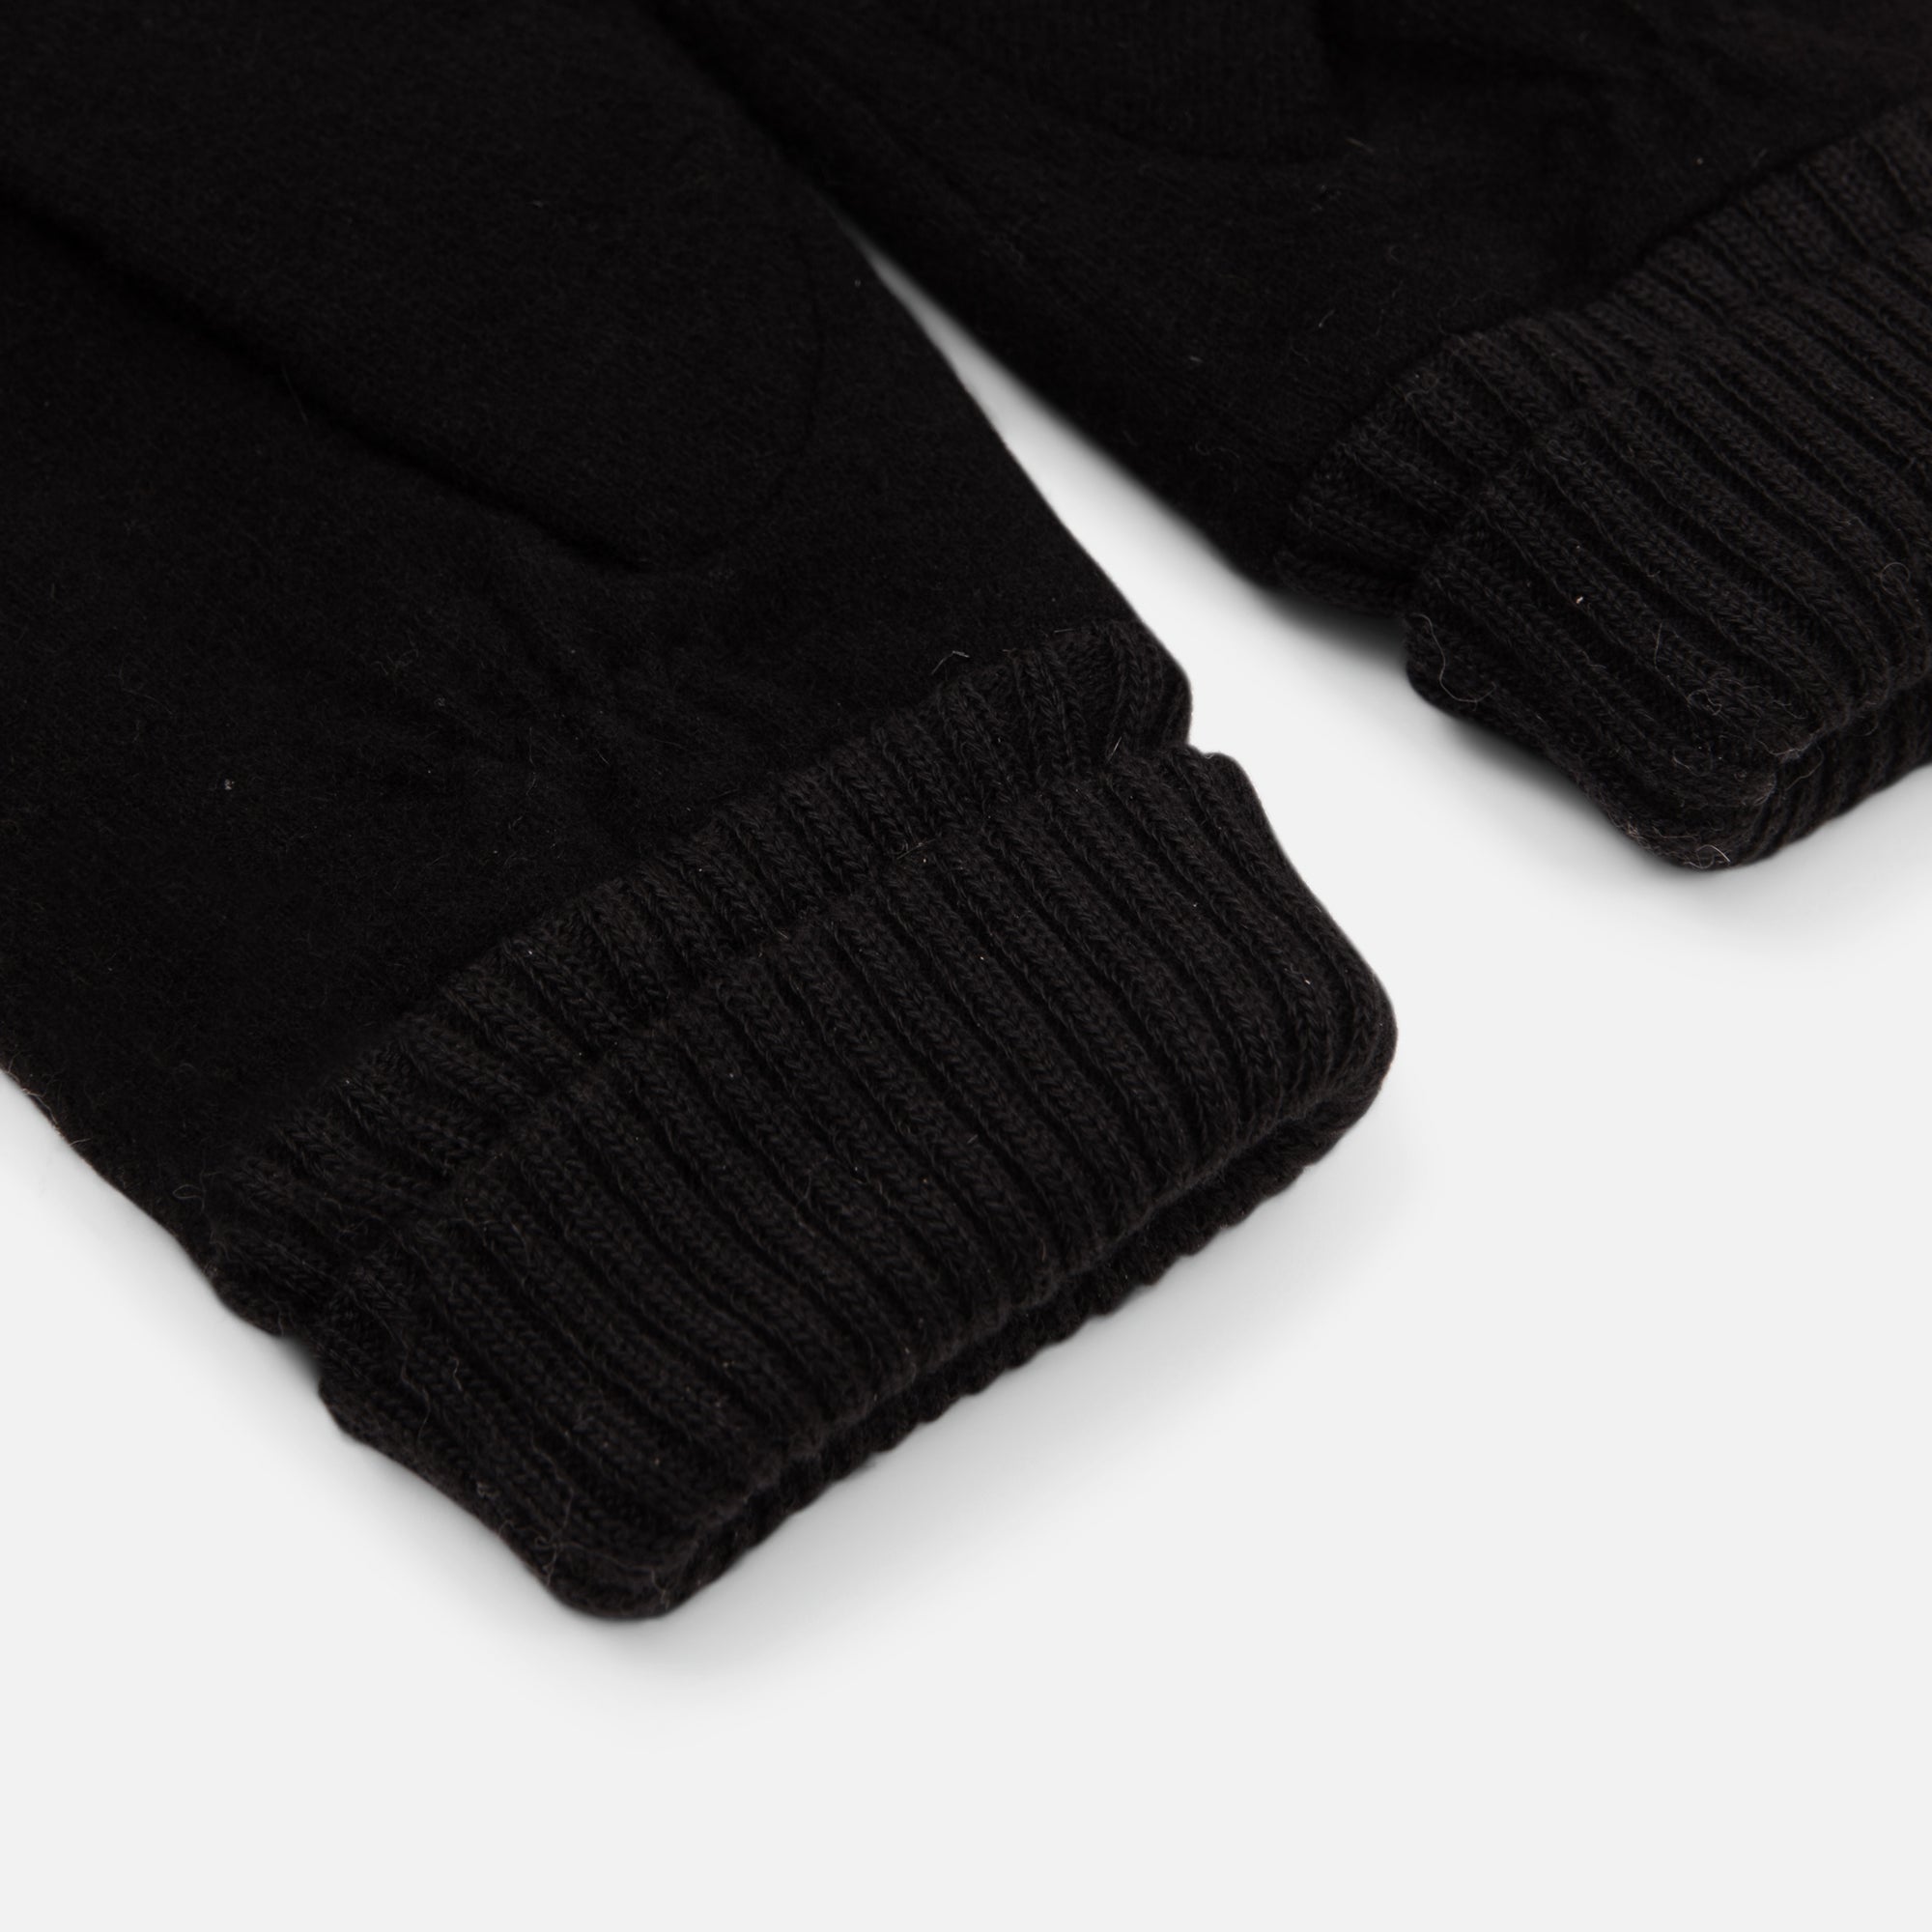 Black mittens with knit wrist